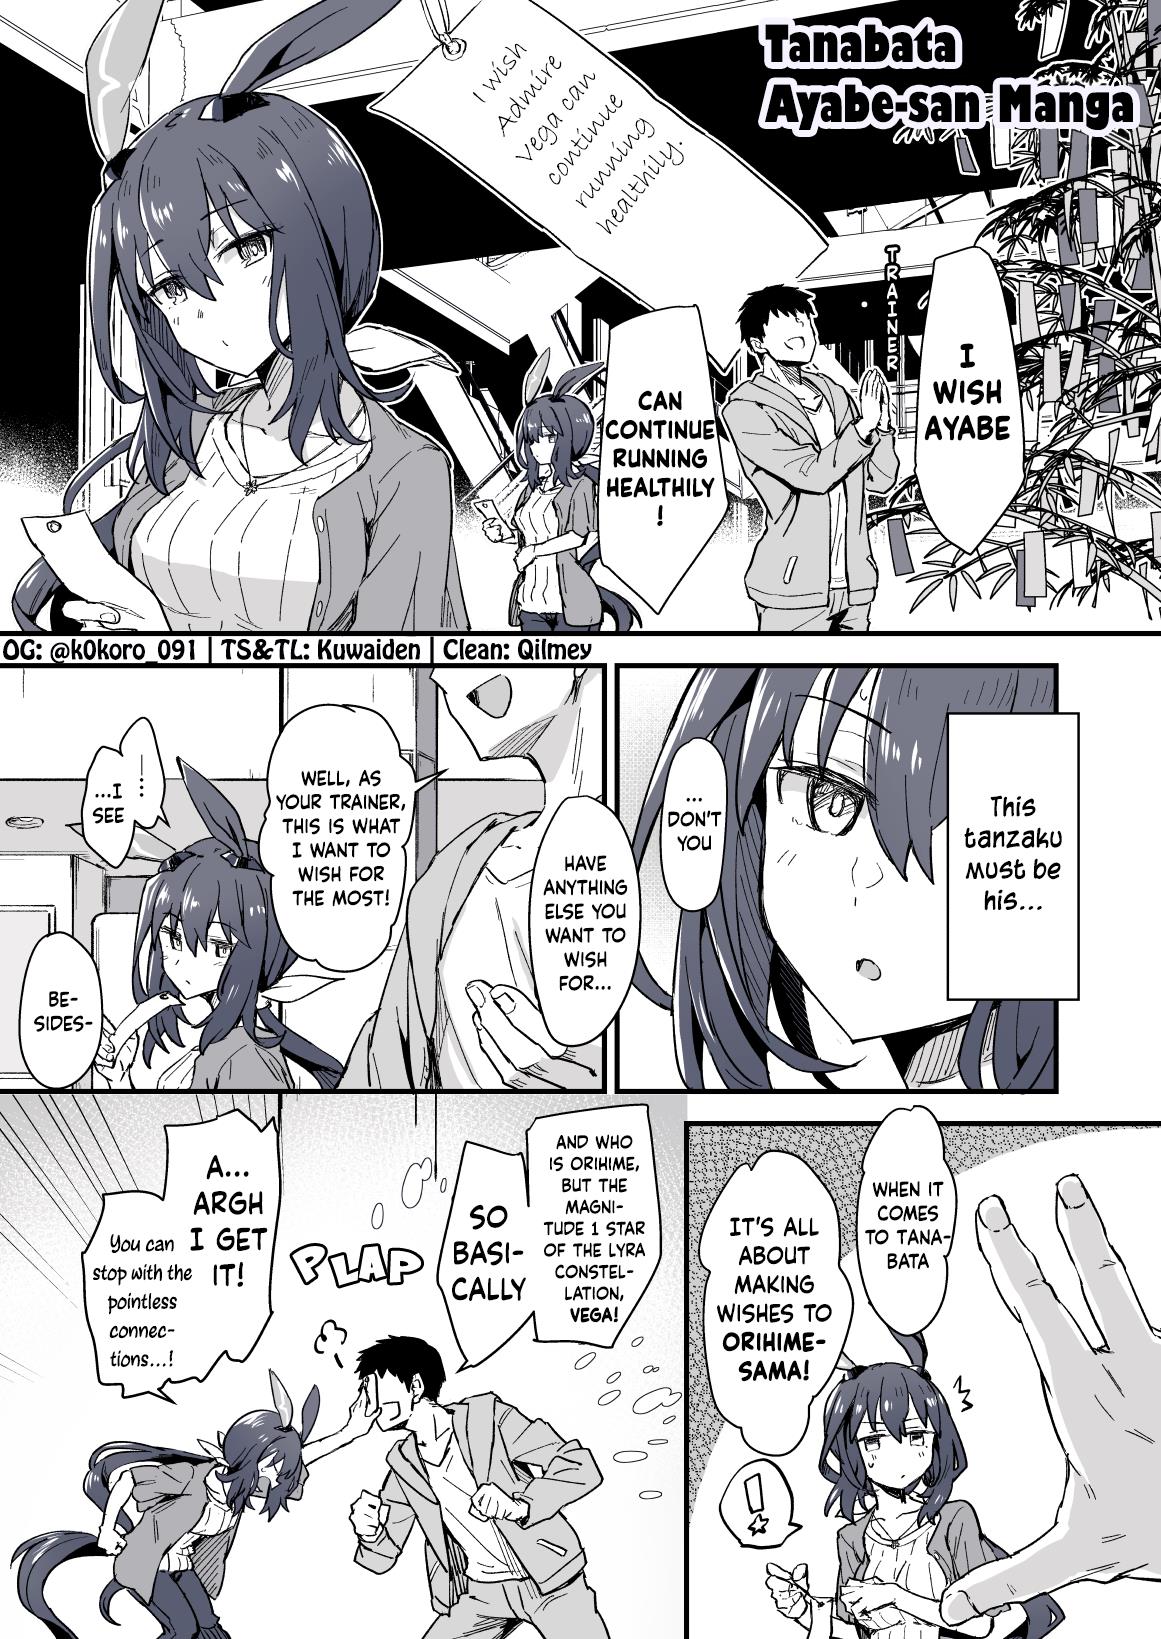 Kokoro-Sensei's Umamusume Shorts (Doujinshi) Chapter 24: Tanabata Ayabe-San Manga - Picture 1